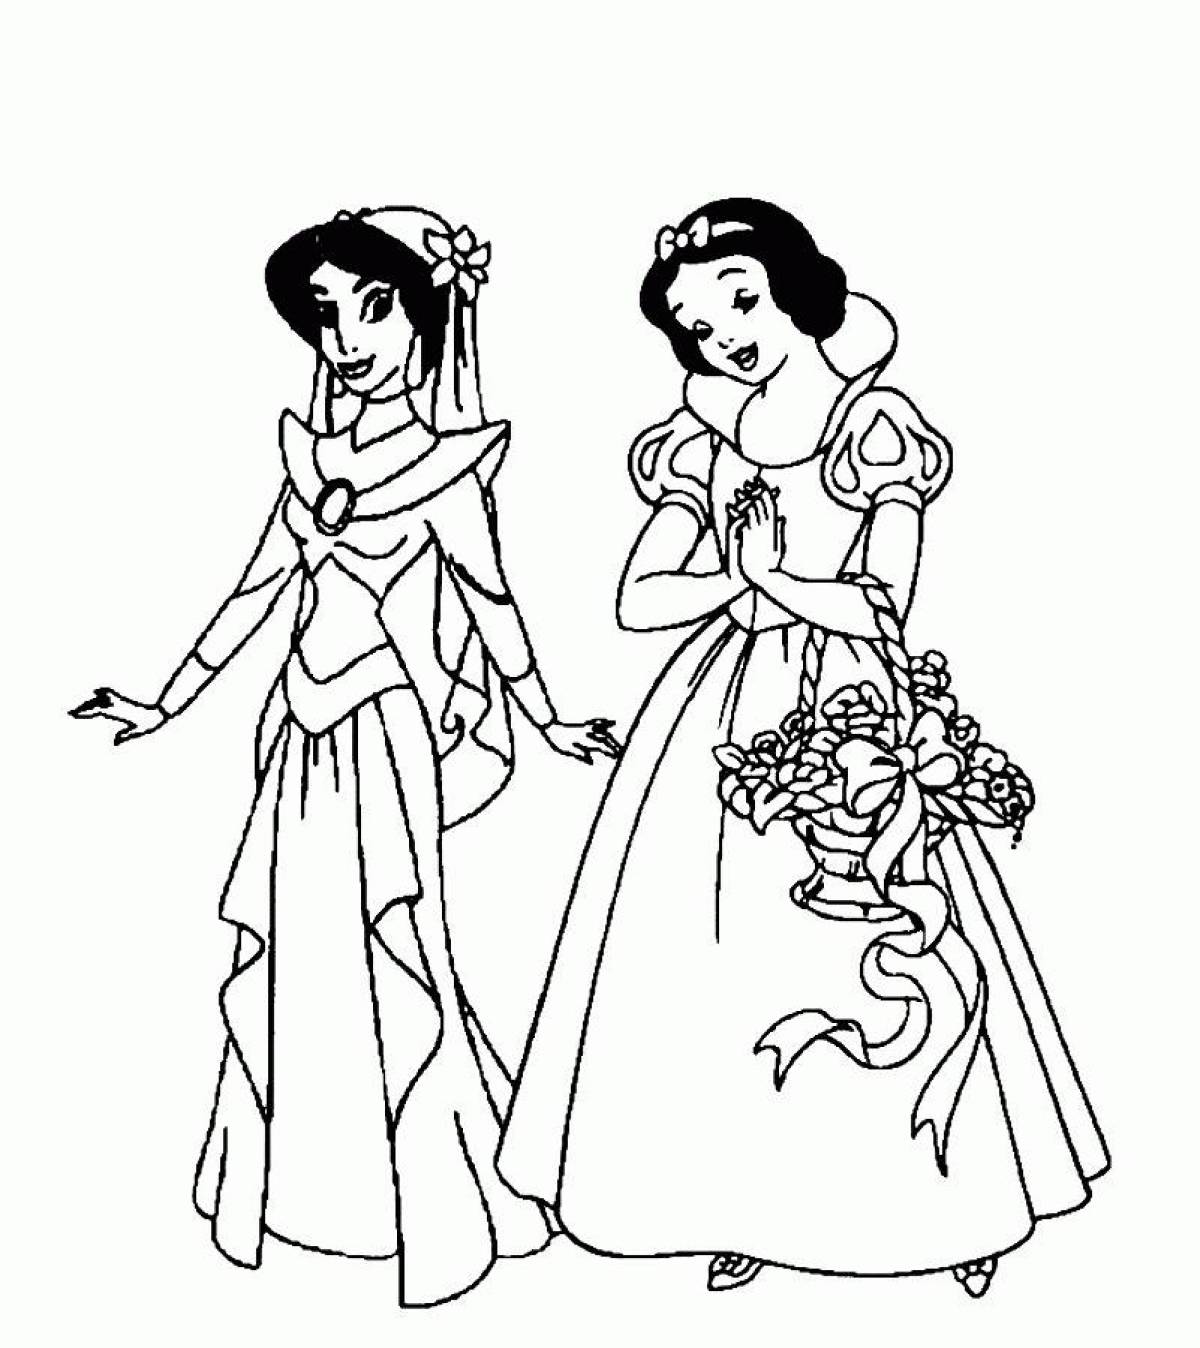 Disney princesses in pretty dresses #3